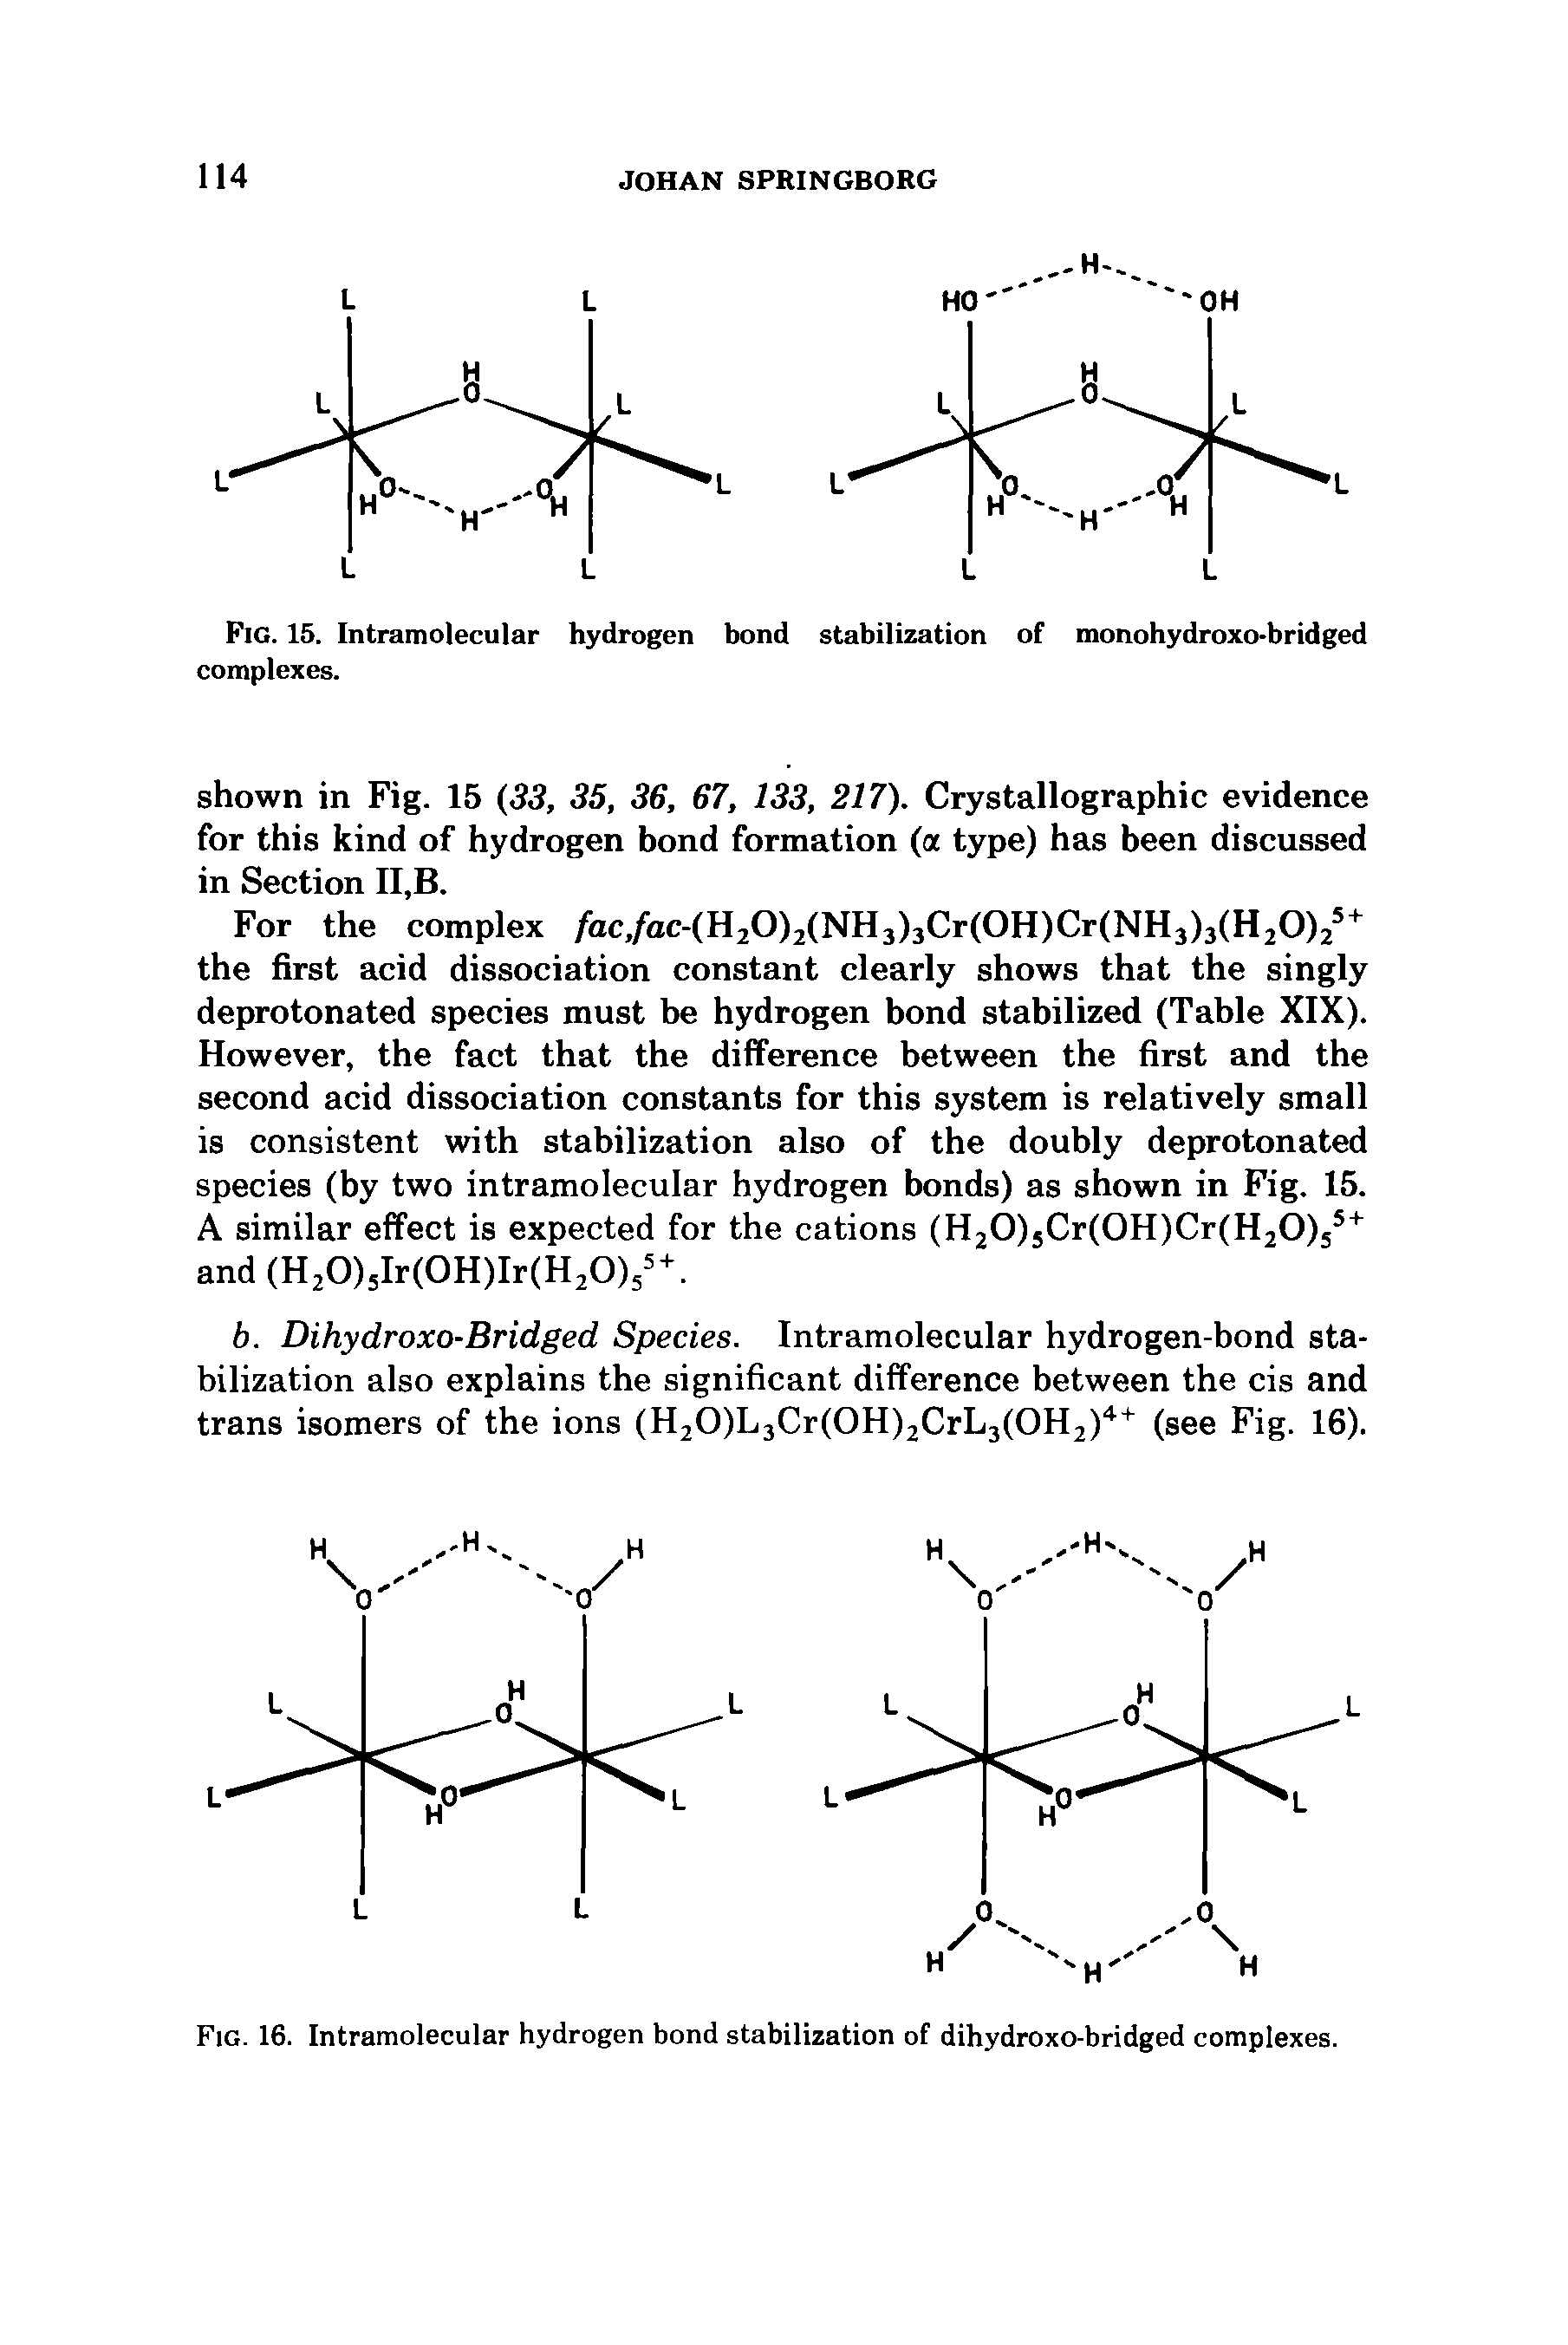 Fig. 16. Intramolecular hydrogen bond stabilization of dihydroxo-bridged complexes.